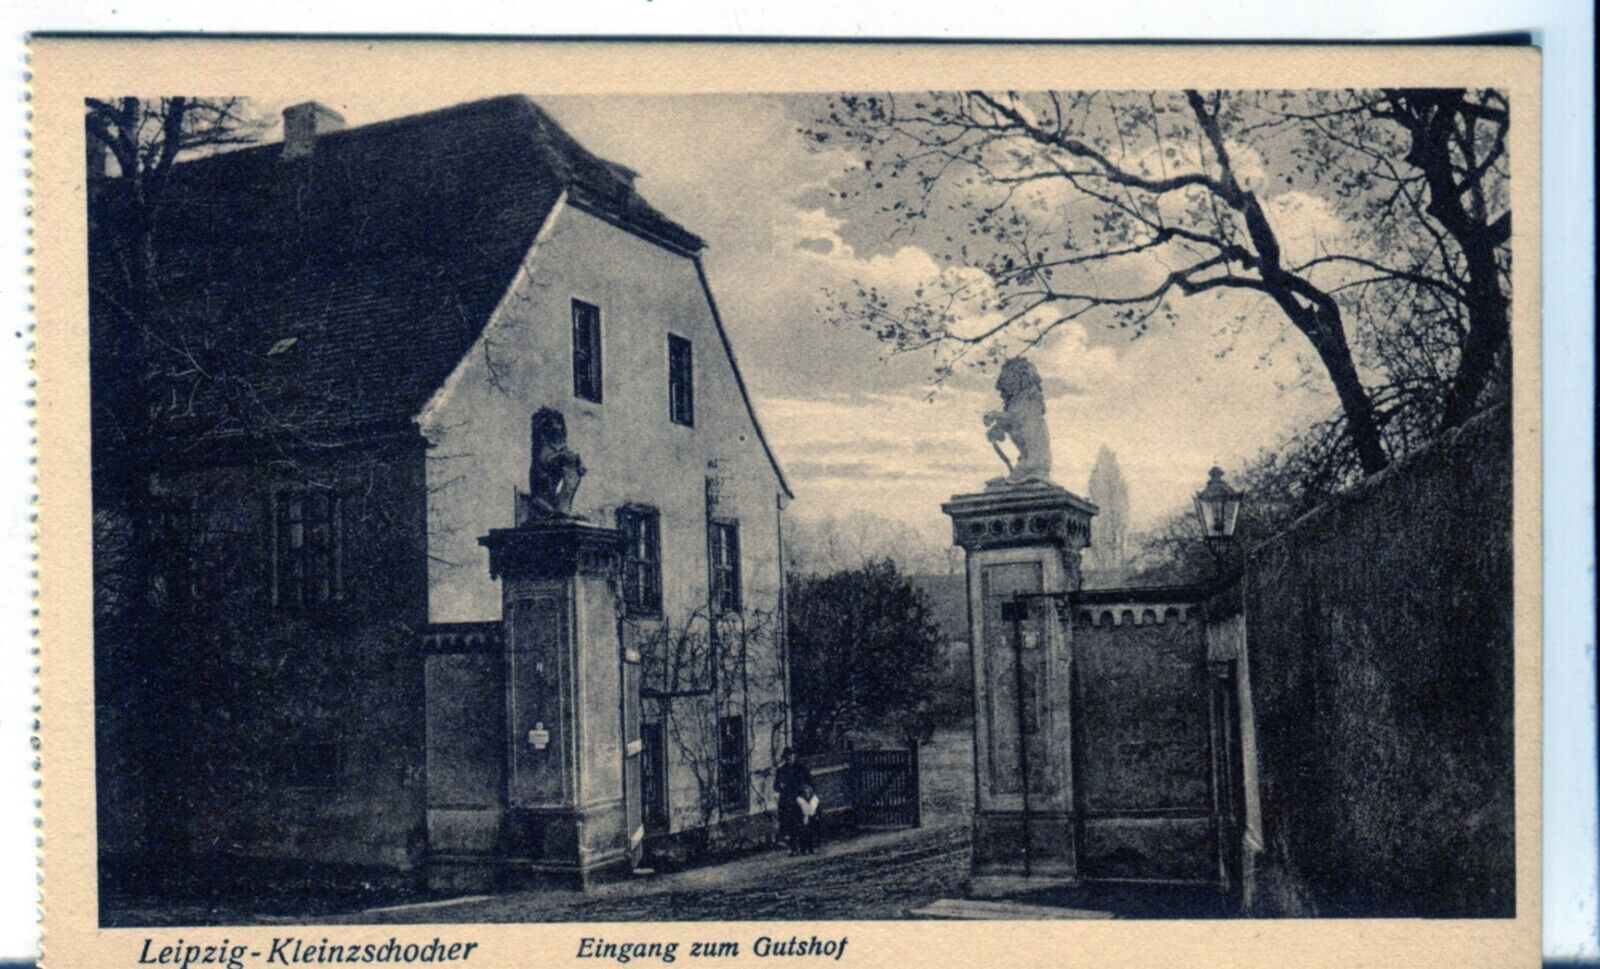 Germany Leipzig-Kleinzschoher 04229 Eingang zum Guthof old postcard from booklet